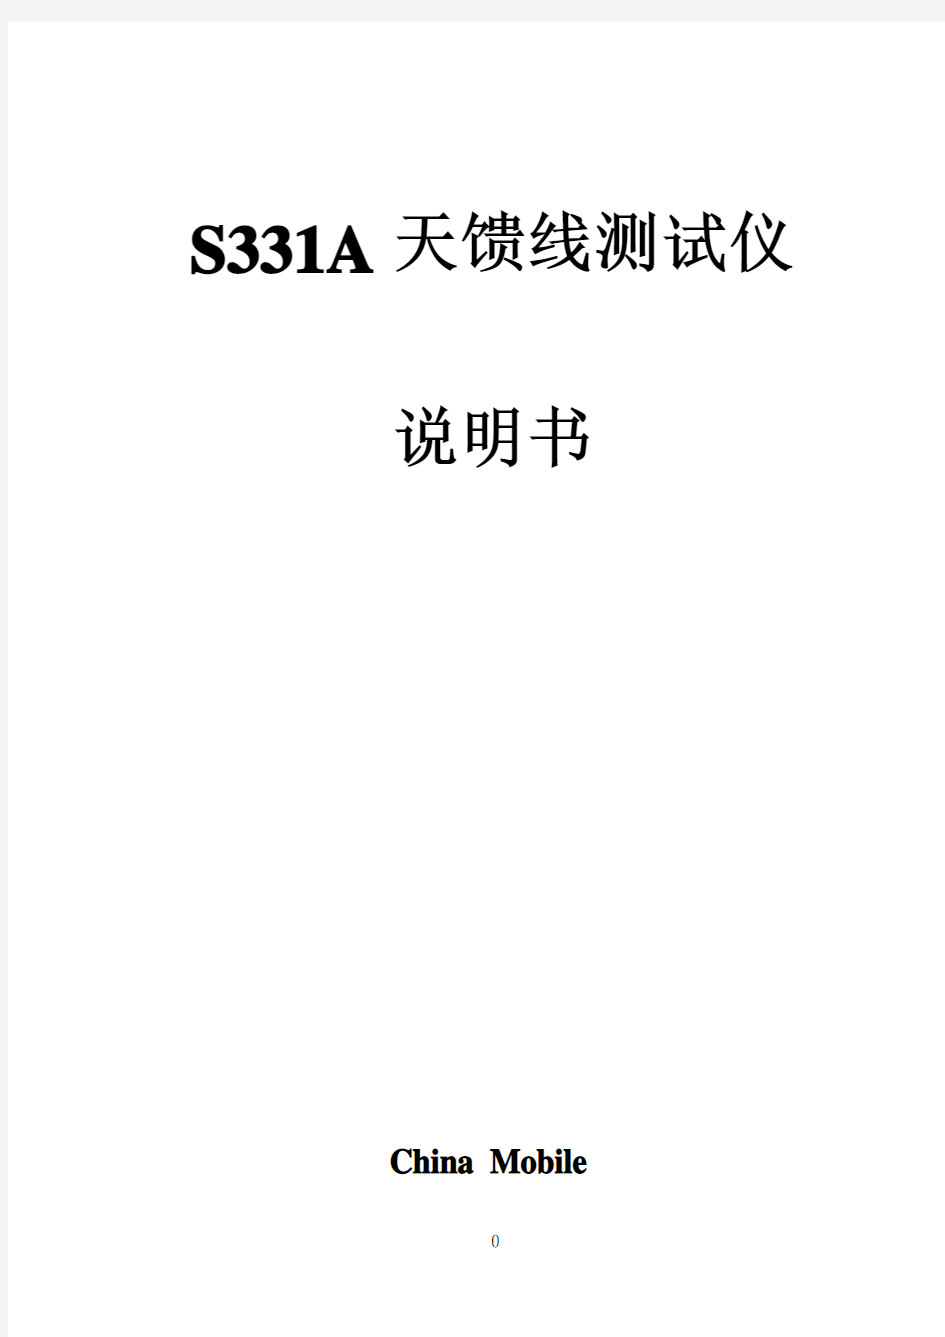 S331A天馈线测试仪说明书